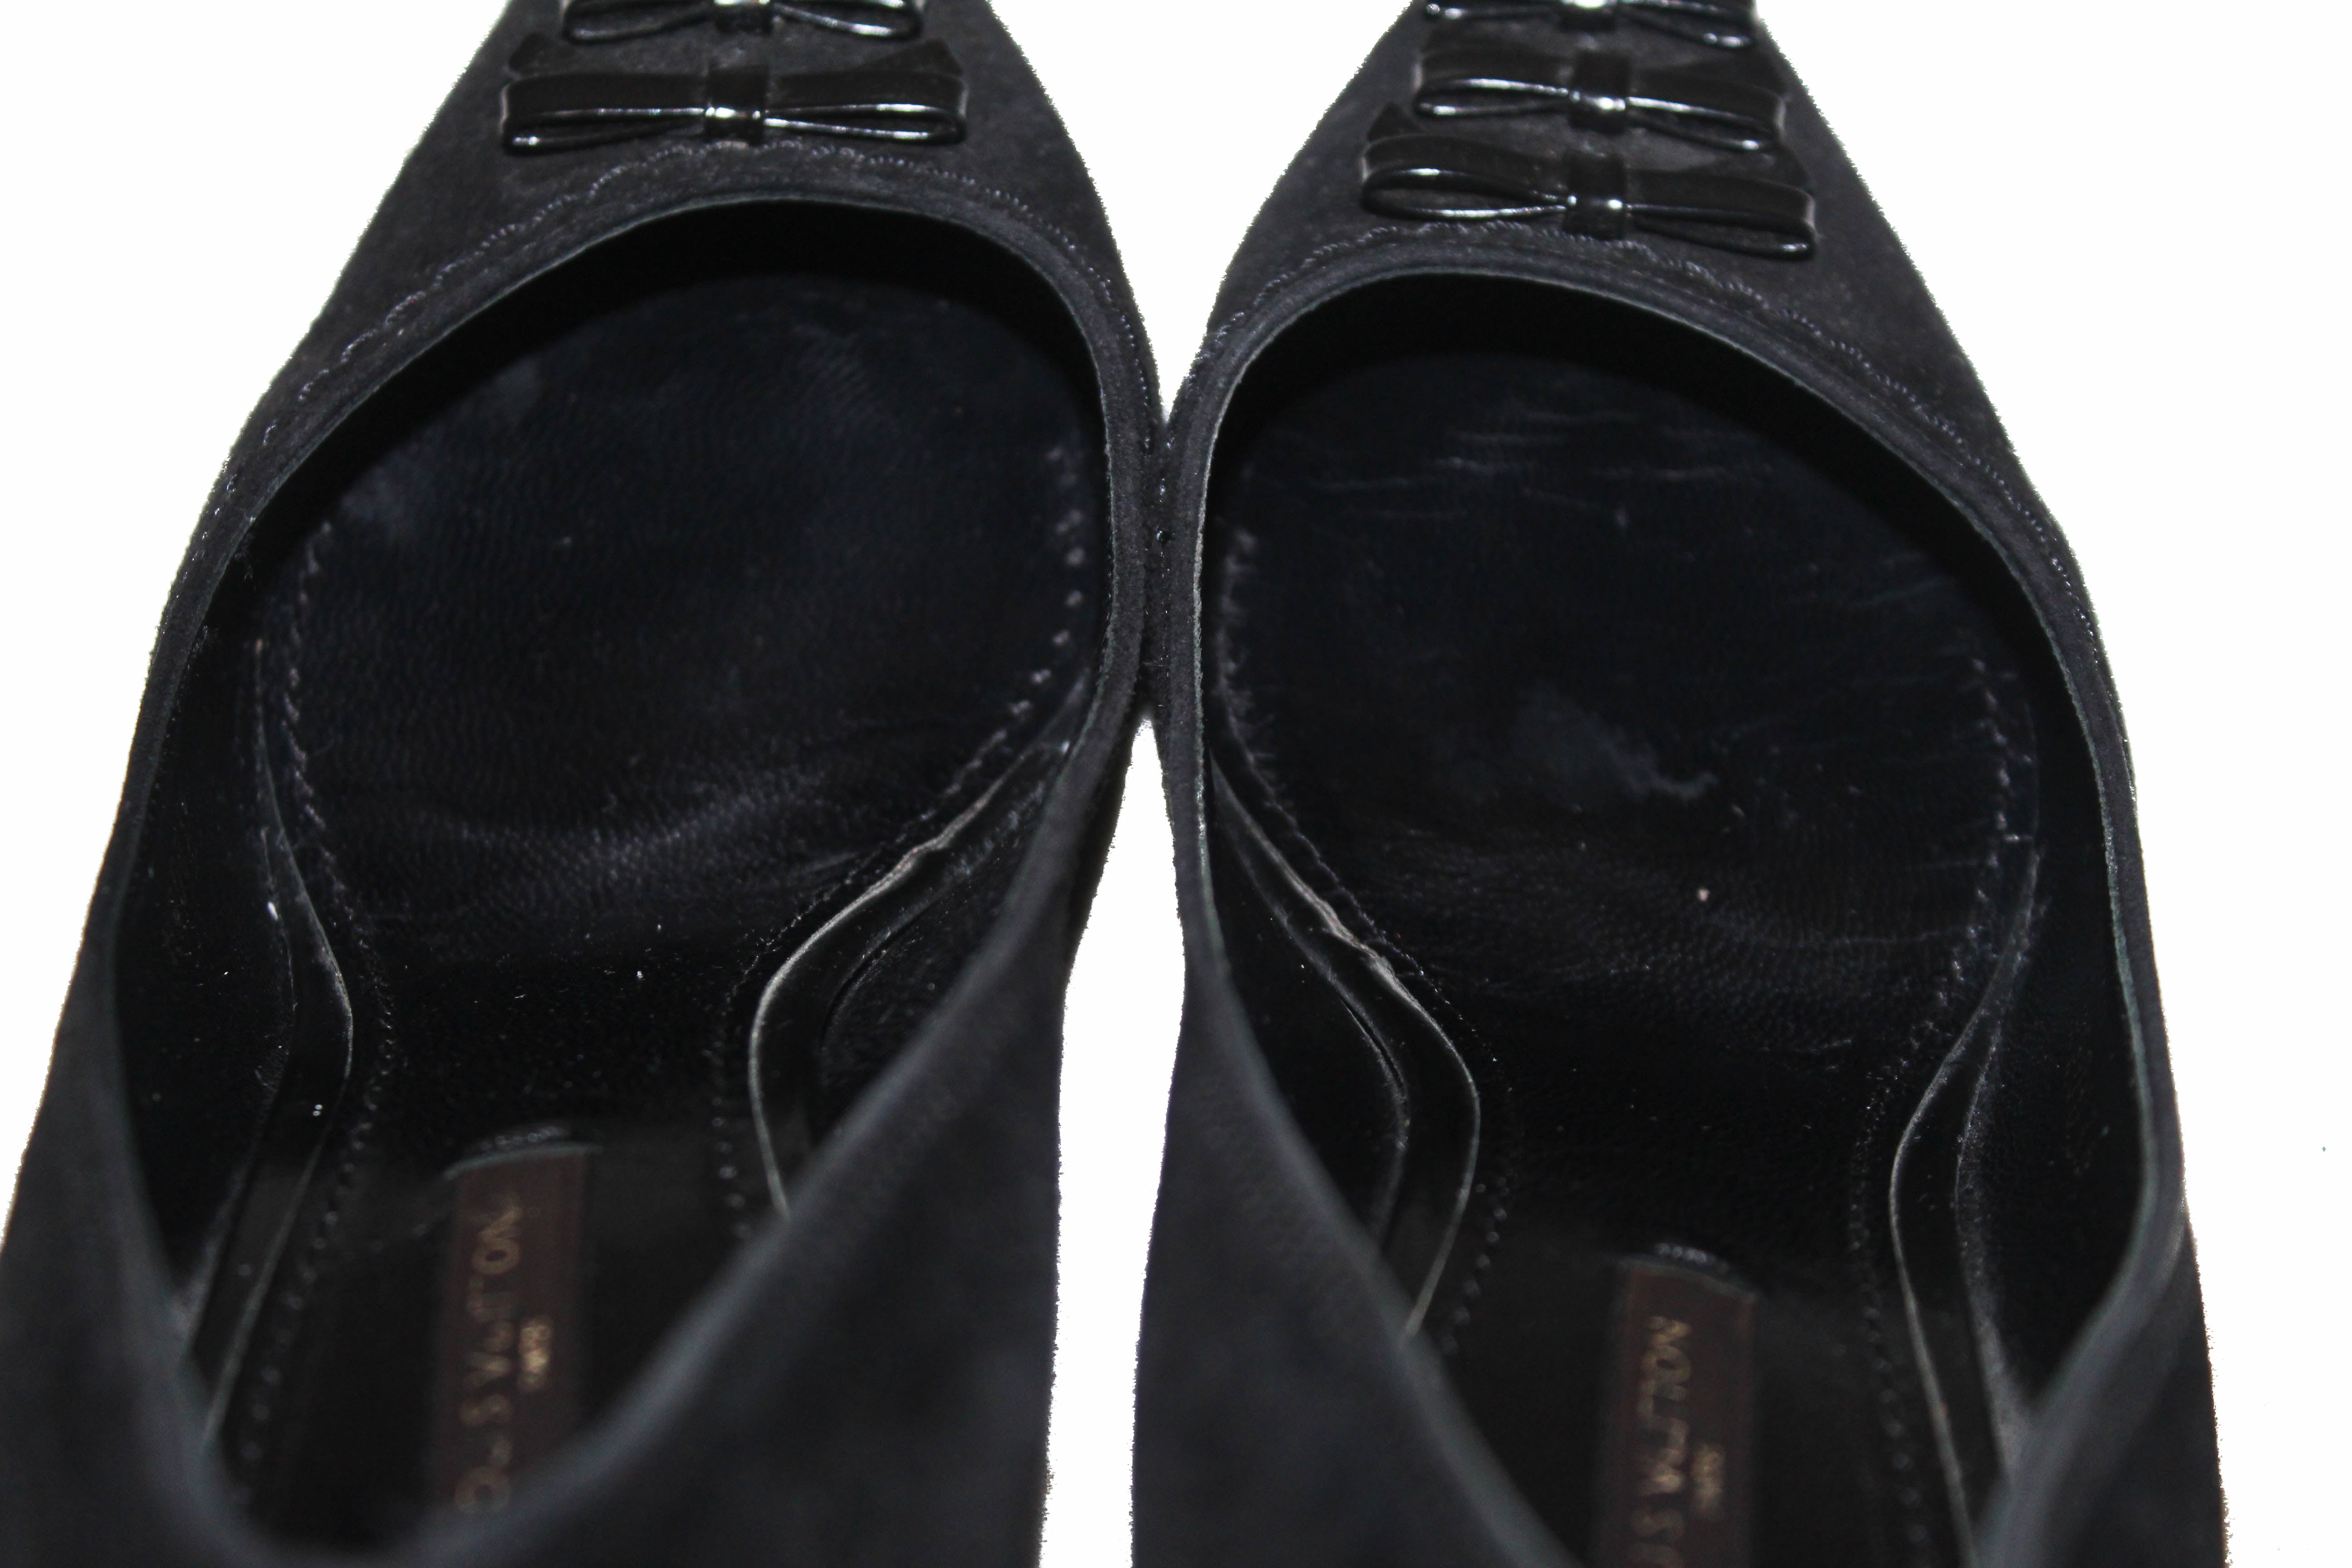 Authentic Louis Vuitton Black Suede Leather Bow Pointed Toe Pumps Size 37.5